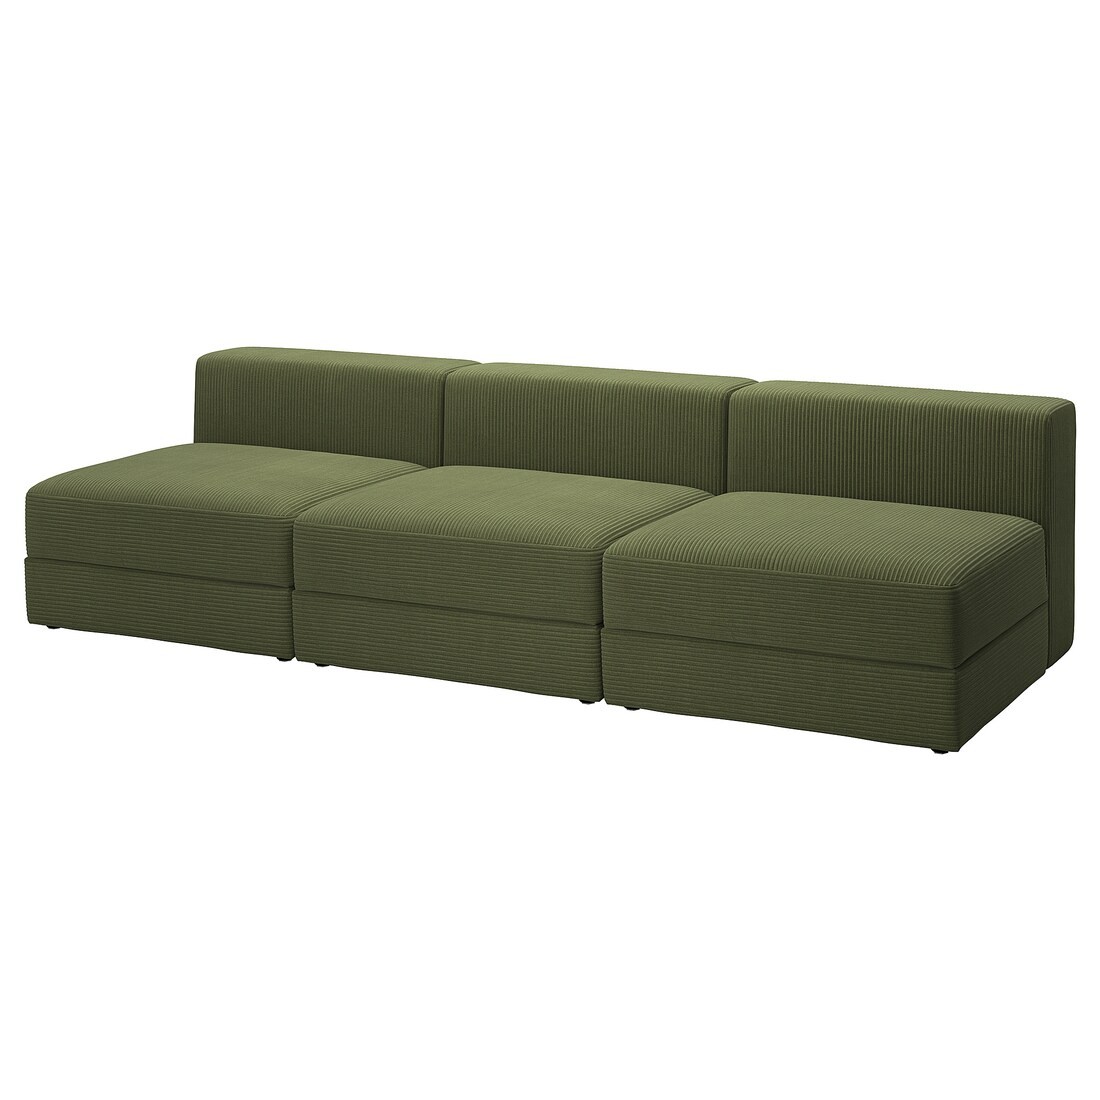 IKEA JÄTTEBO 4, 5-місний модульний диван, Samsala темний жовто-зелений 39485096 394.850.96